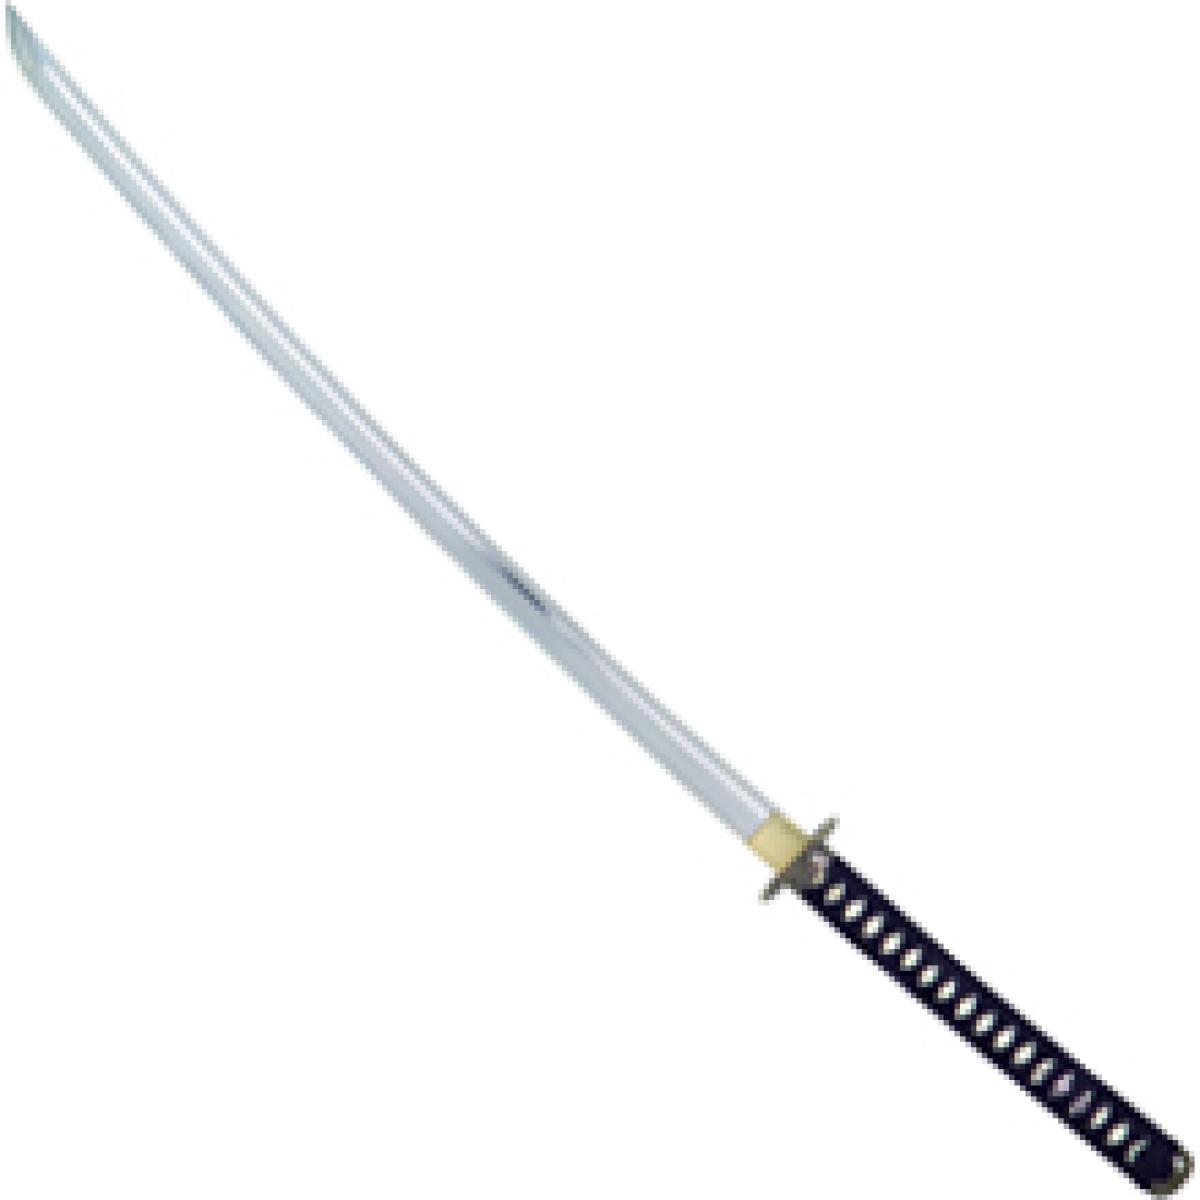 John Lee Samurai sword set "Dragon" ➤ www.bokken-Shop.de ✅ consisting of Dragon Katana, Wakizashi & Tanto ✓ sharp ✓ The Katana specialist dealer